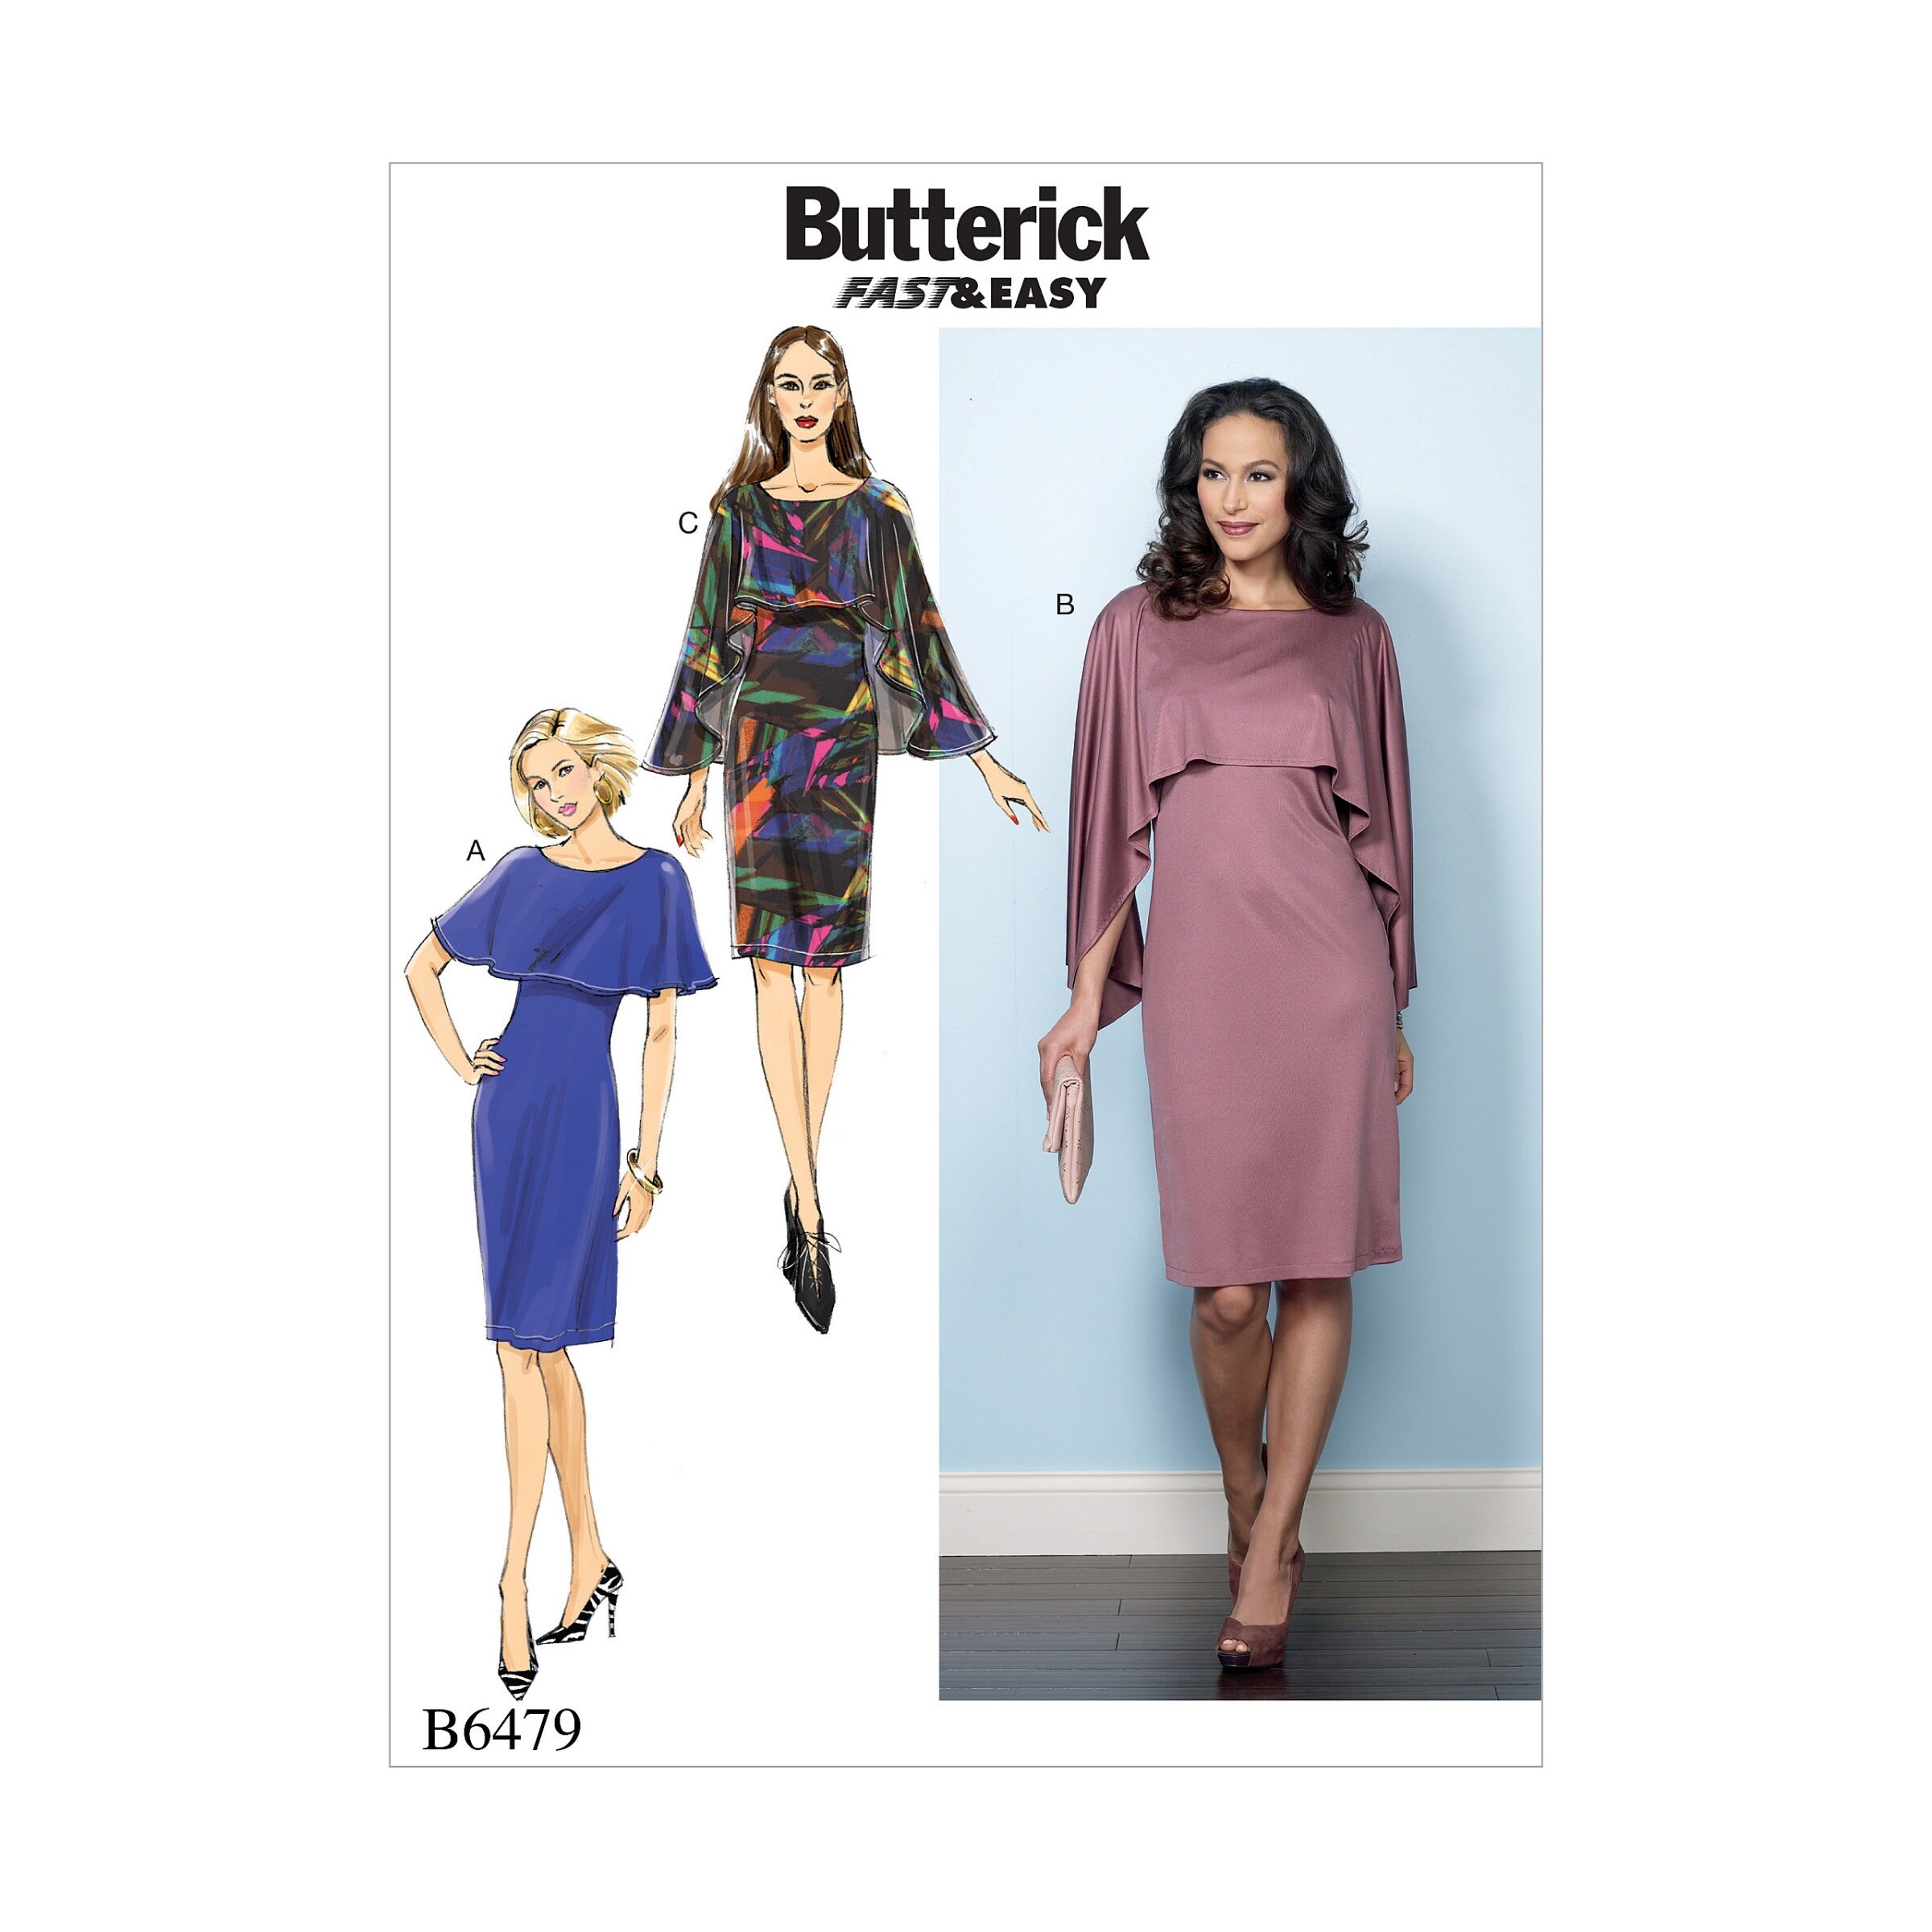 Butterick 5020 Pattern Easy Girls' Top, Dress, Shorts, Pants